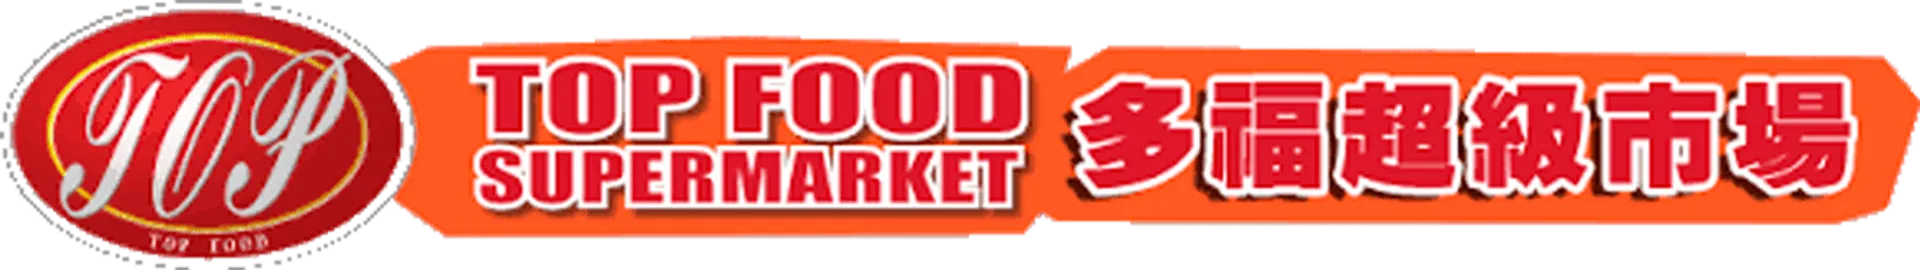 TOP FOOD SUPERMARKET logo